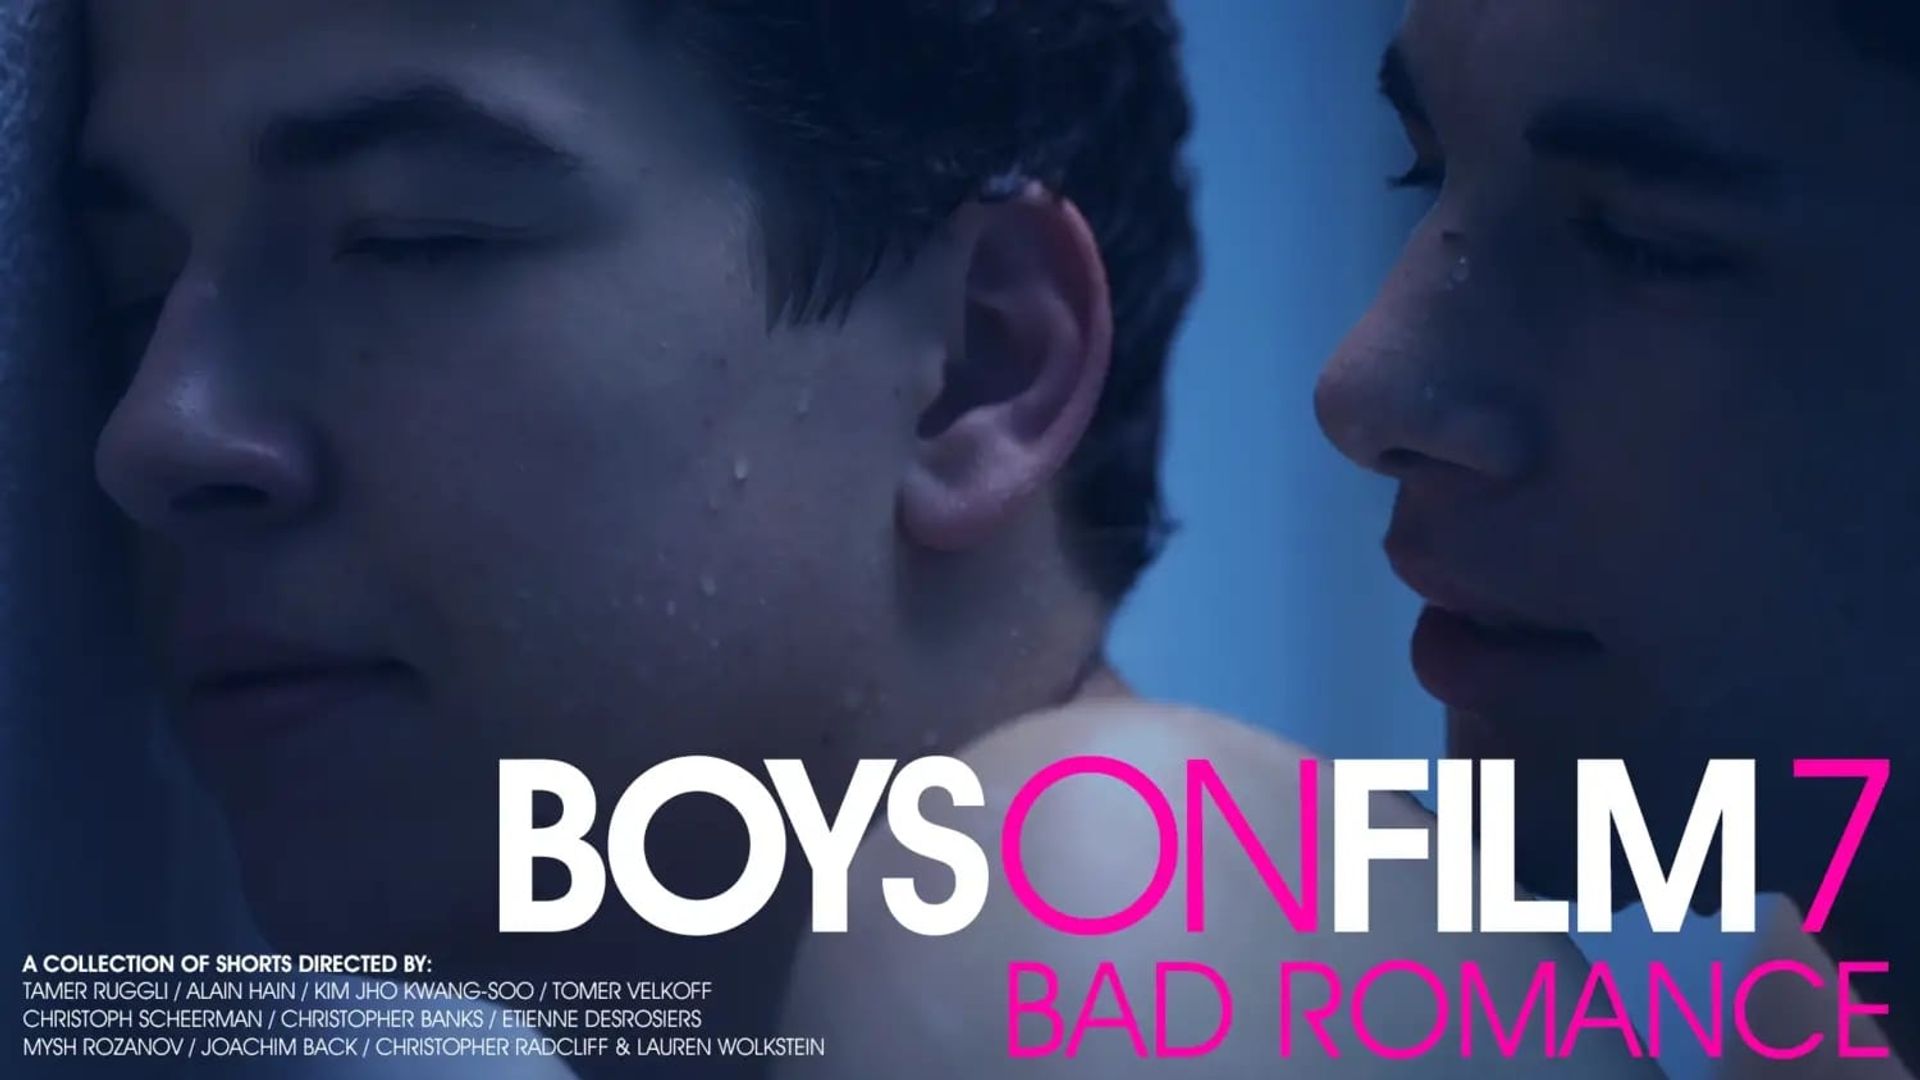 Boys on Film 7: Bad Romance background